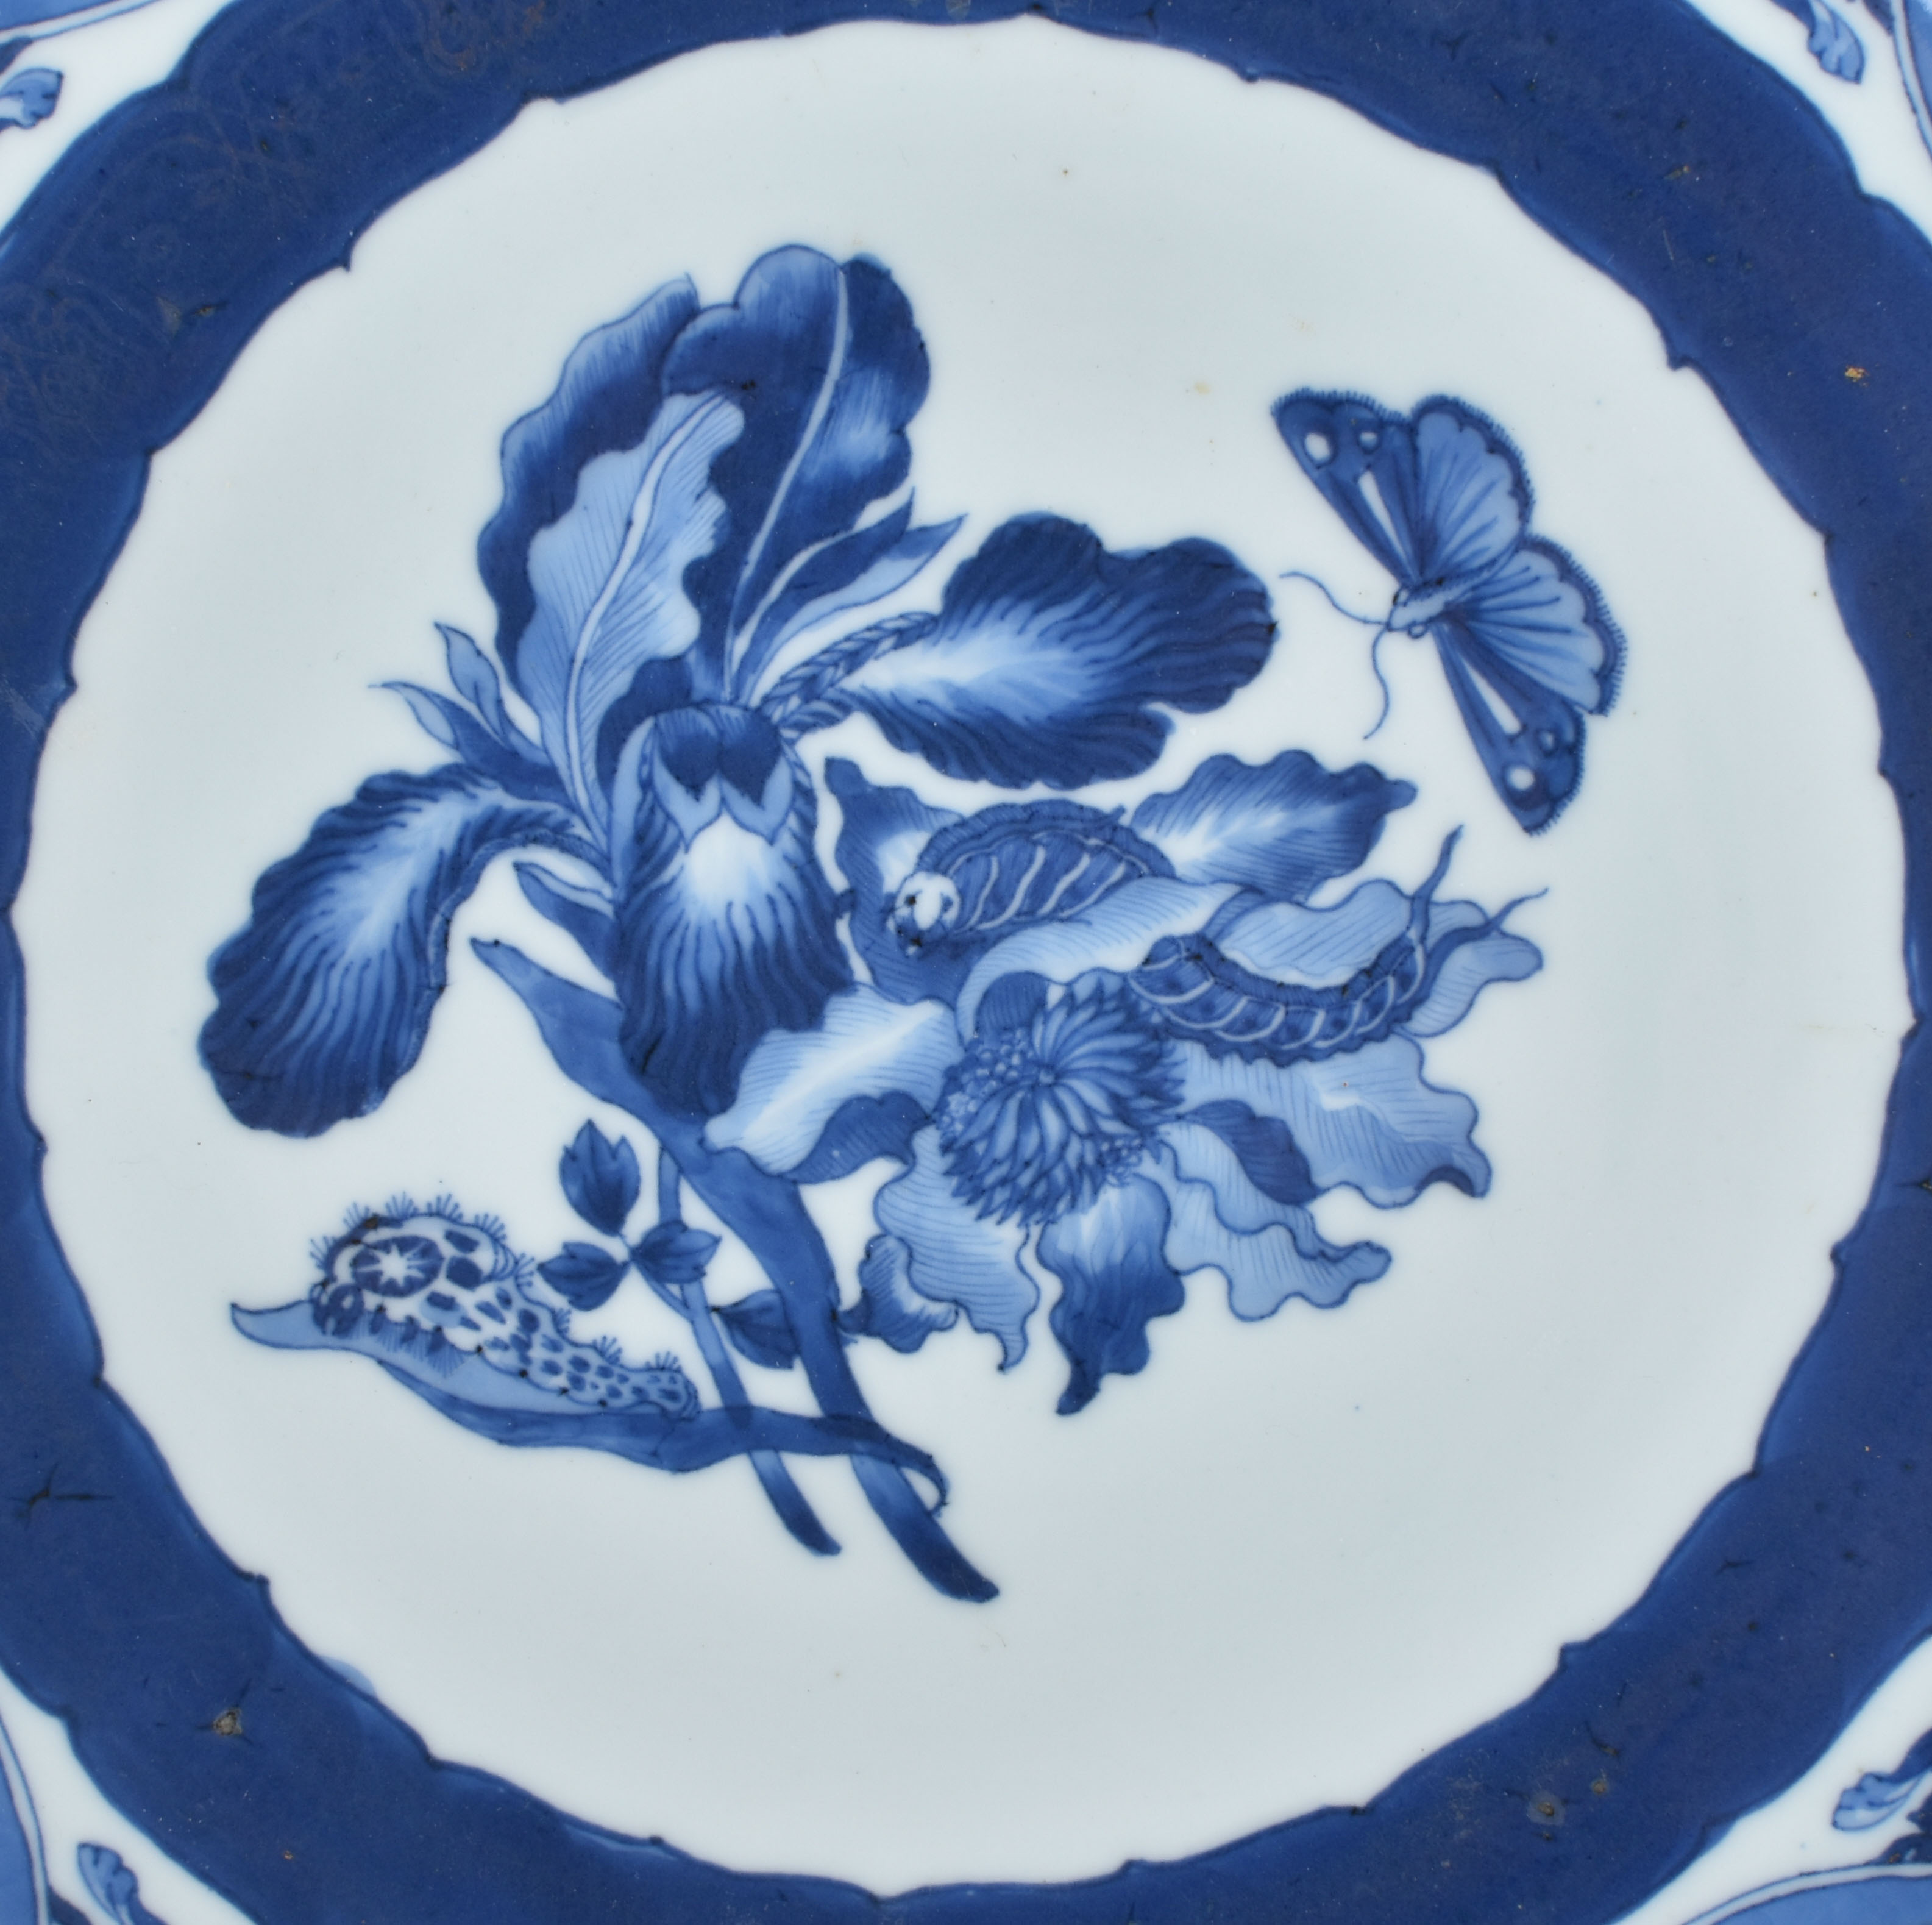 Porcelaine Qianlong period (1736-1795), circa 1738, Chine